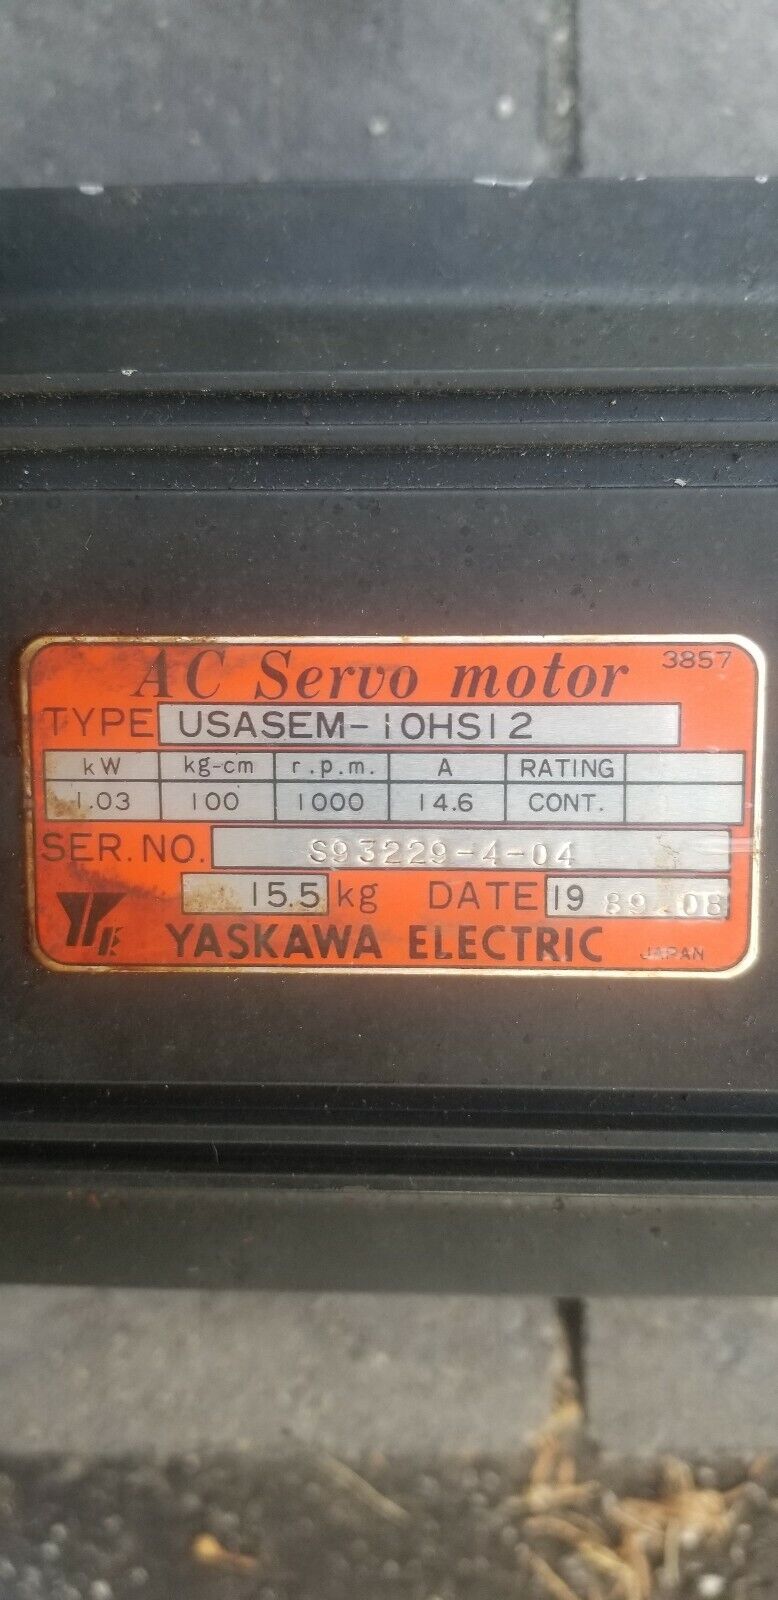 Yaskawa USASEM-10HS12 Servo Motor 1000 RPM 1.03 Kw 